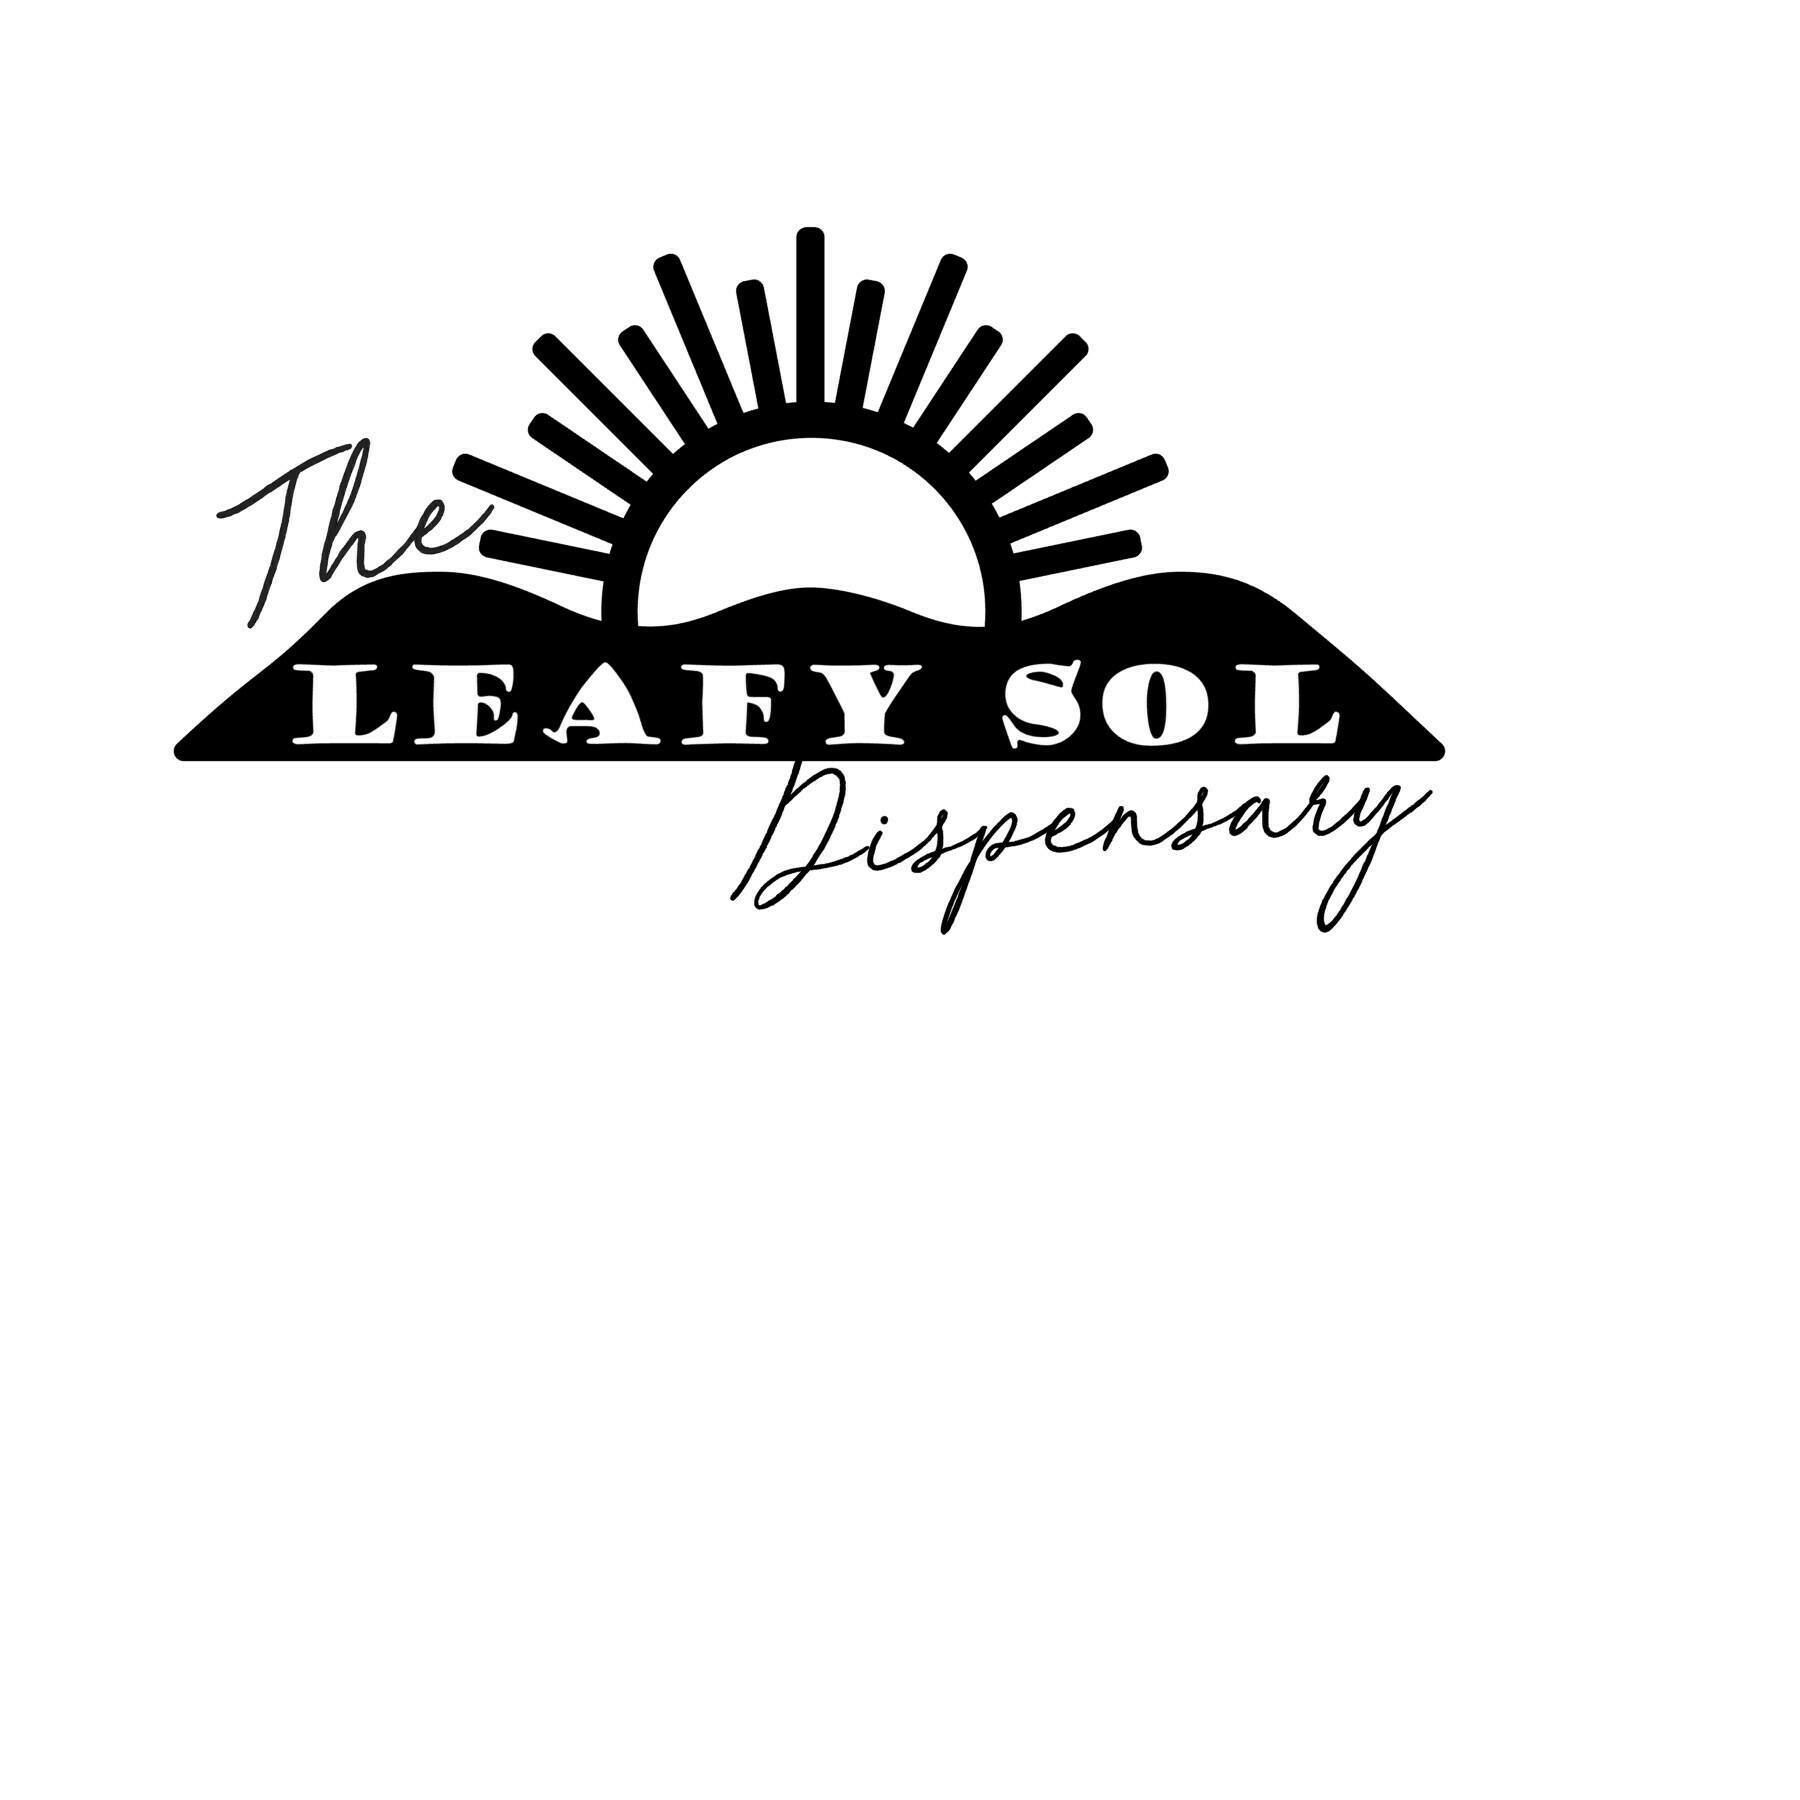 The Leafy Sol Dispensary logo